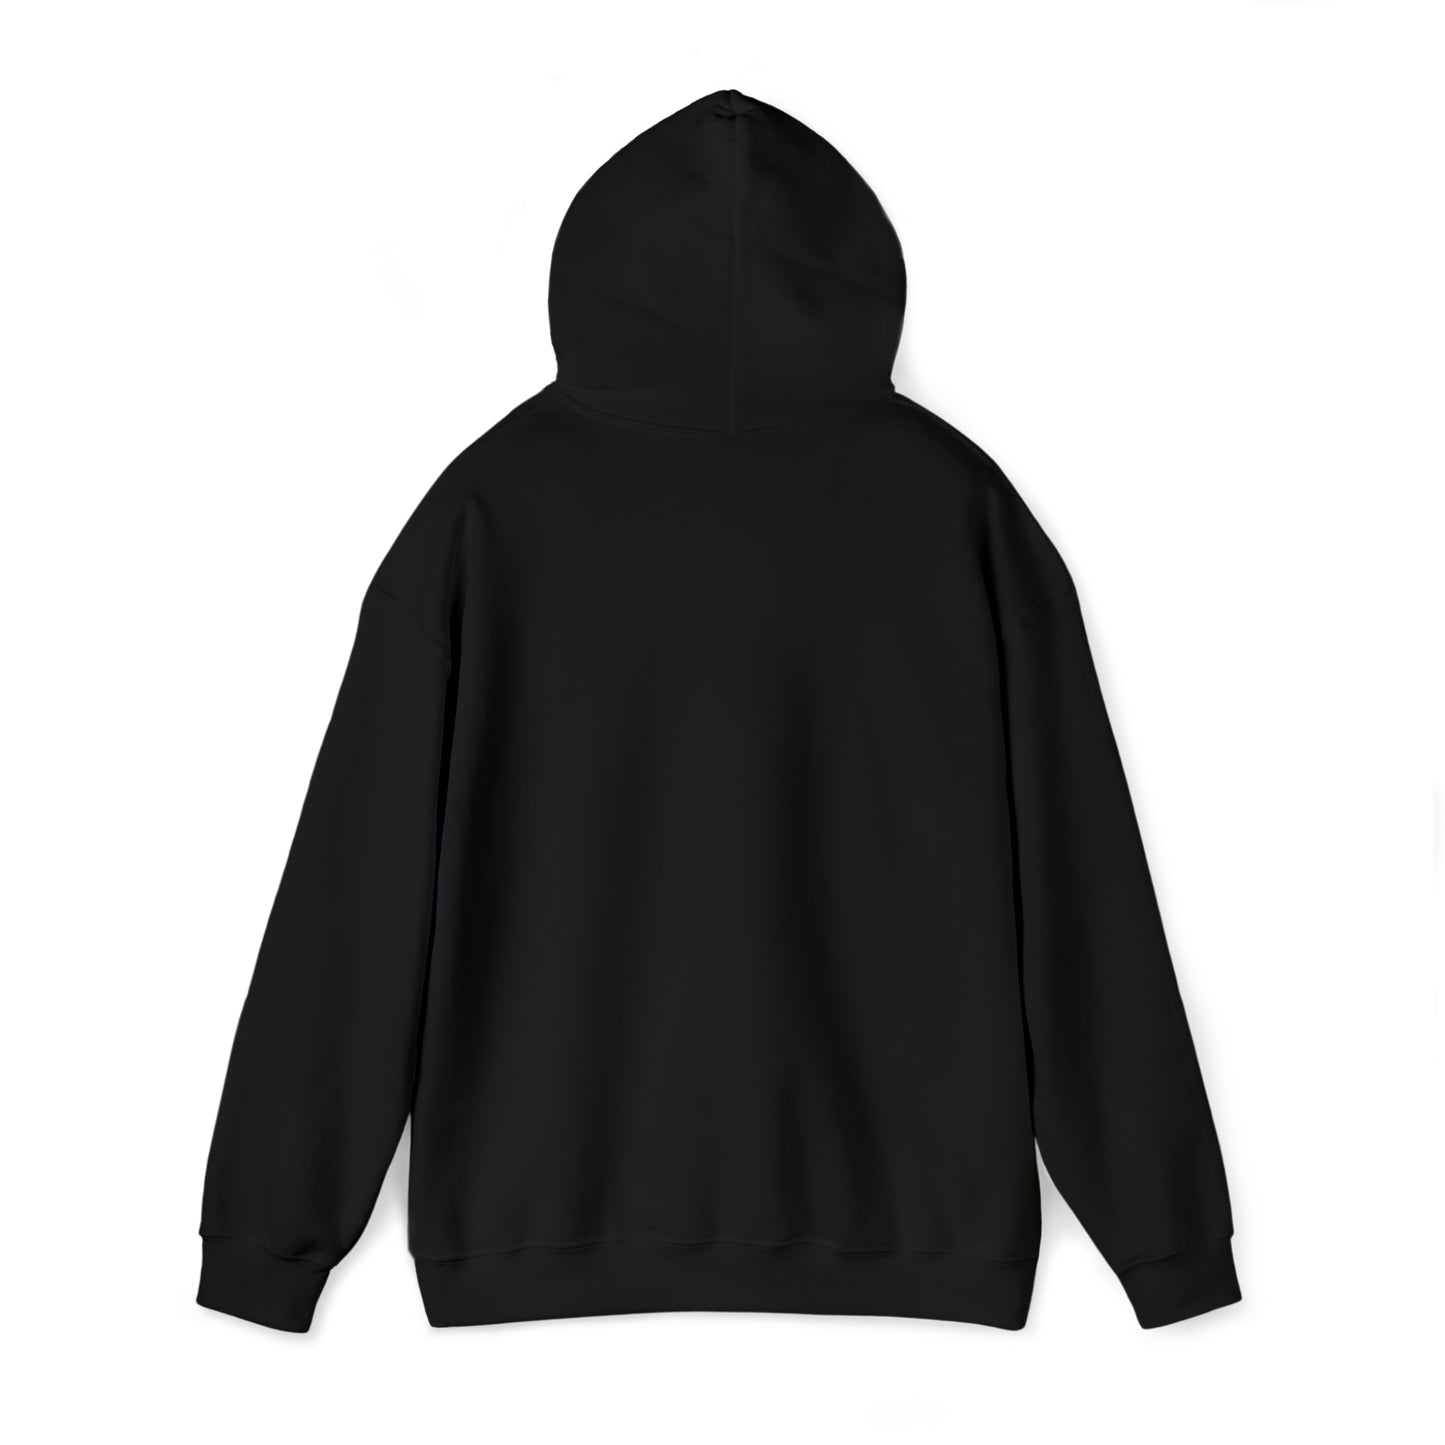 The baDST Heavy Blend Hooded Sweatshirt Black Delta Sigma Theta